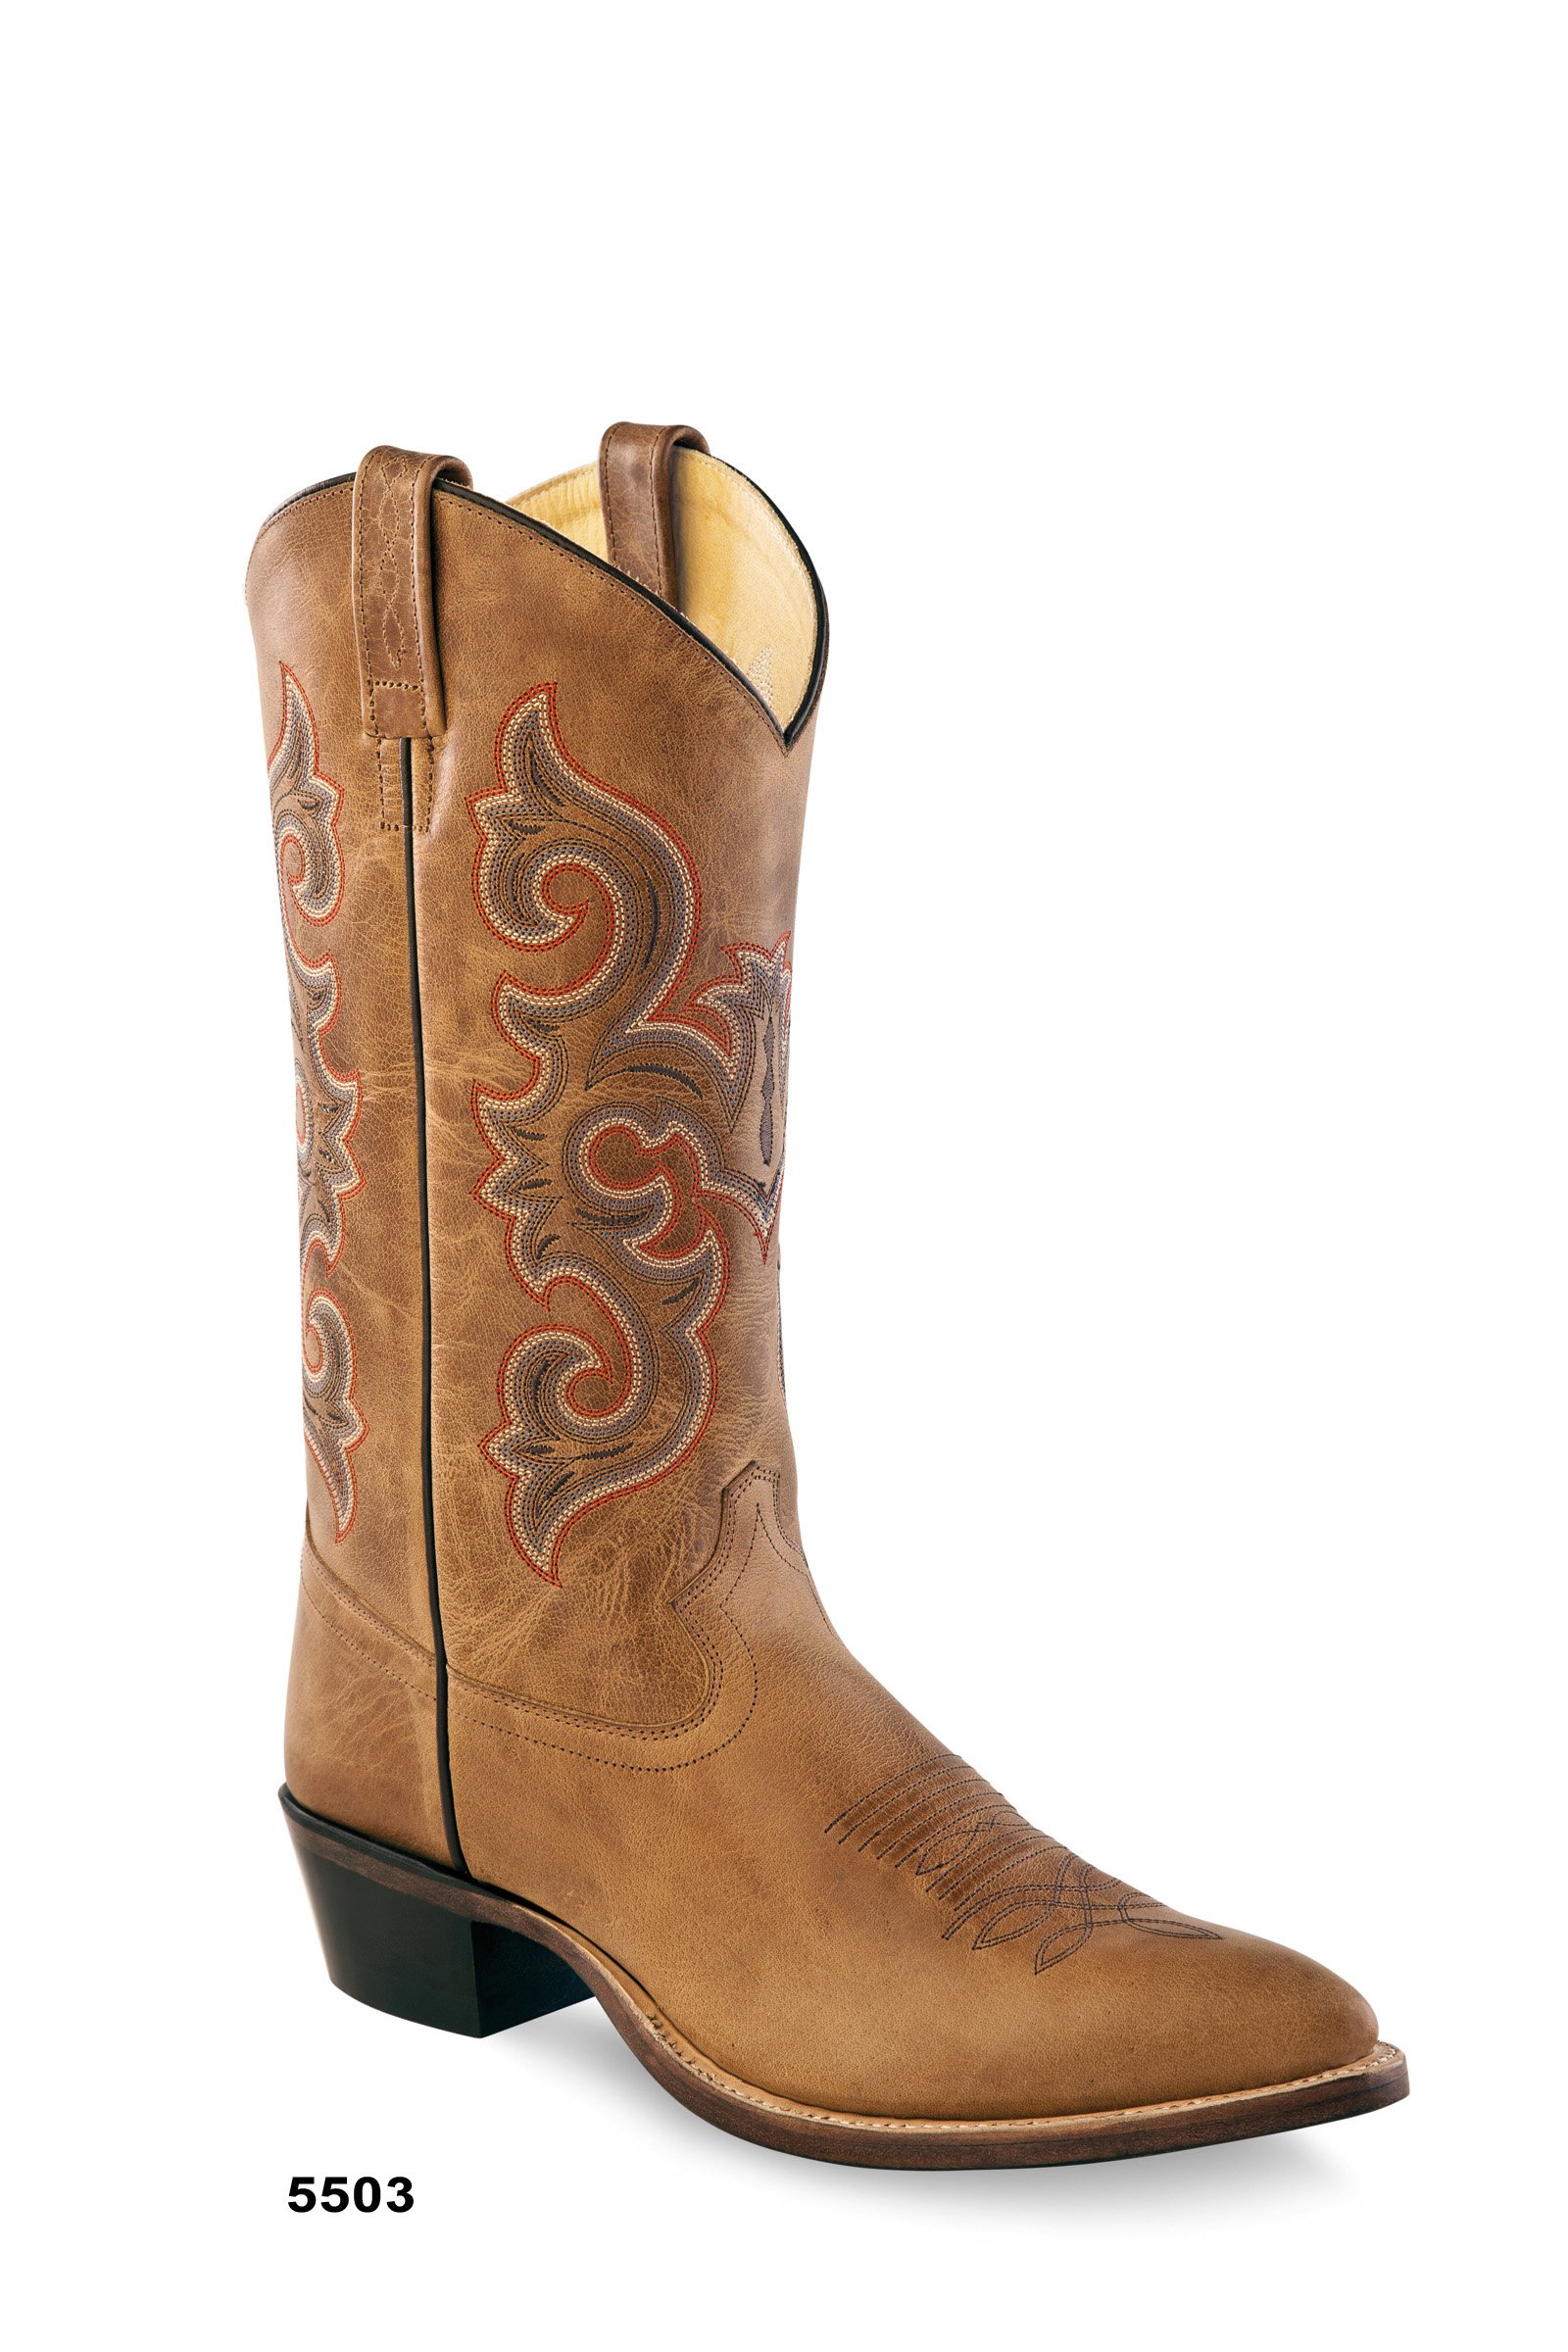 Cowboy boots men 5503, brown-green